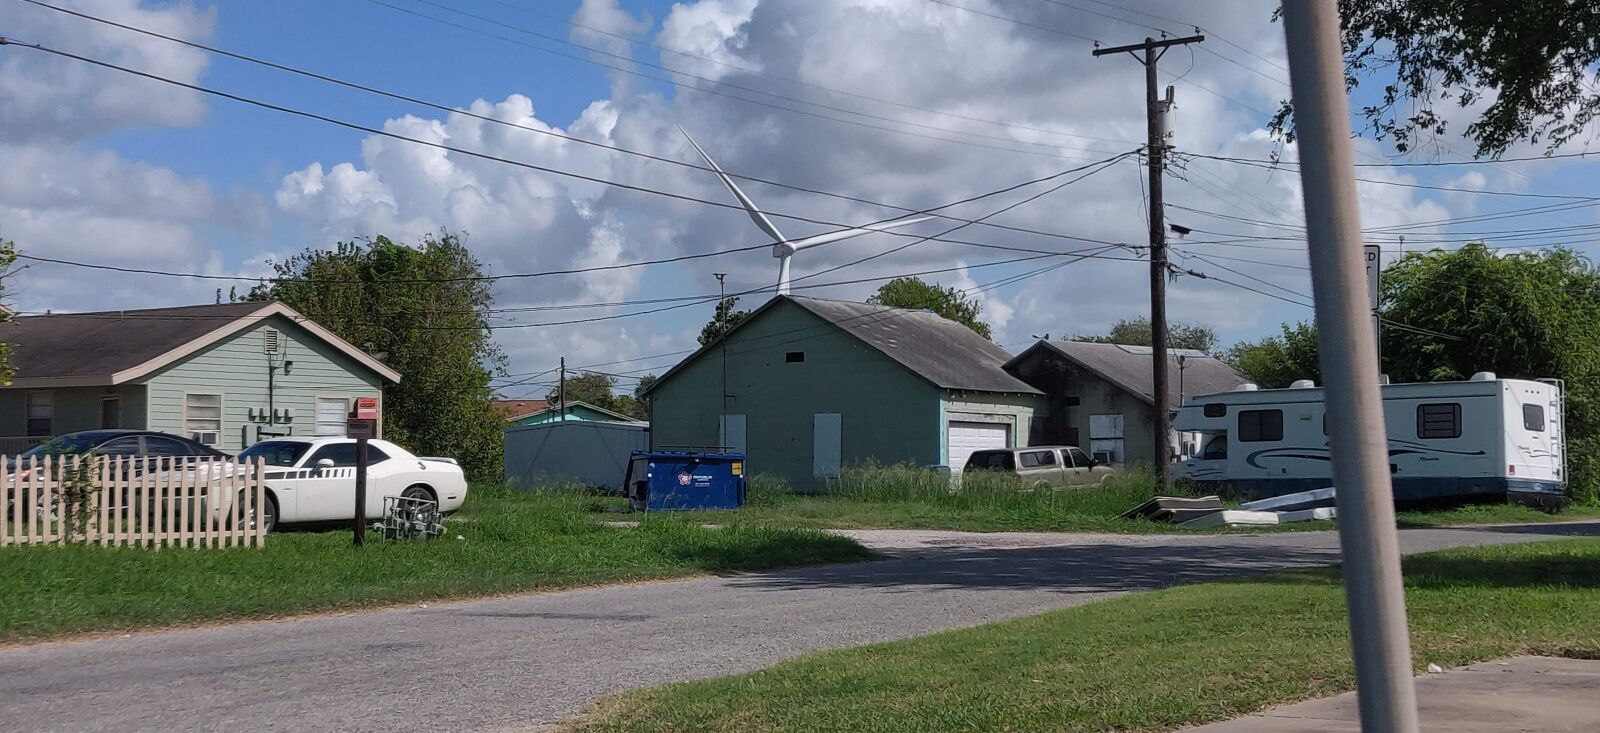 OnePlus 6T sample photo. Wind energy, renewables, energy photography